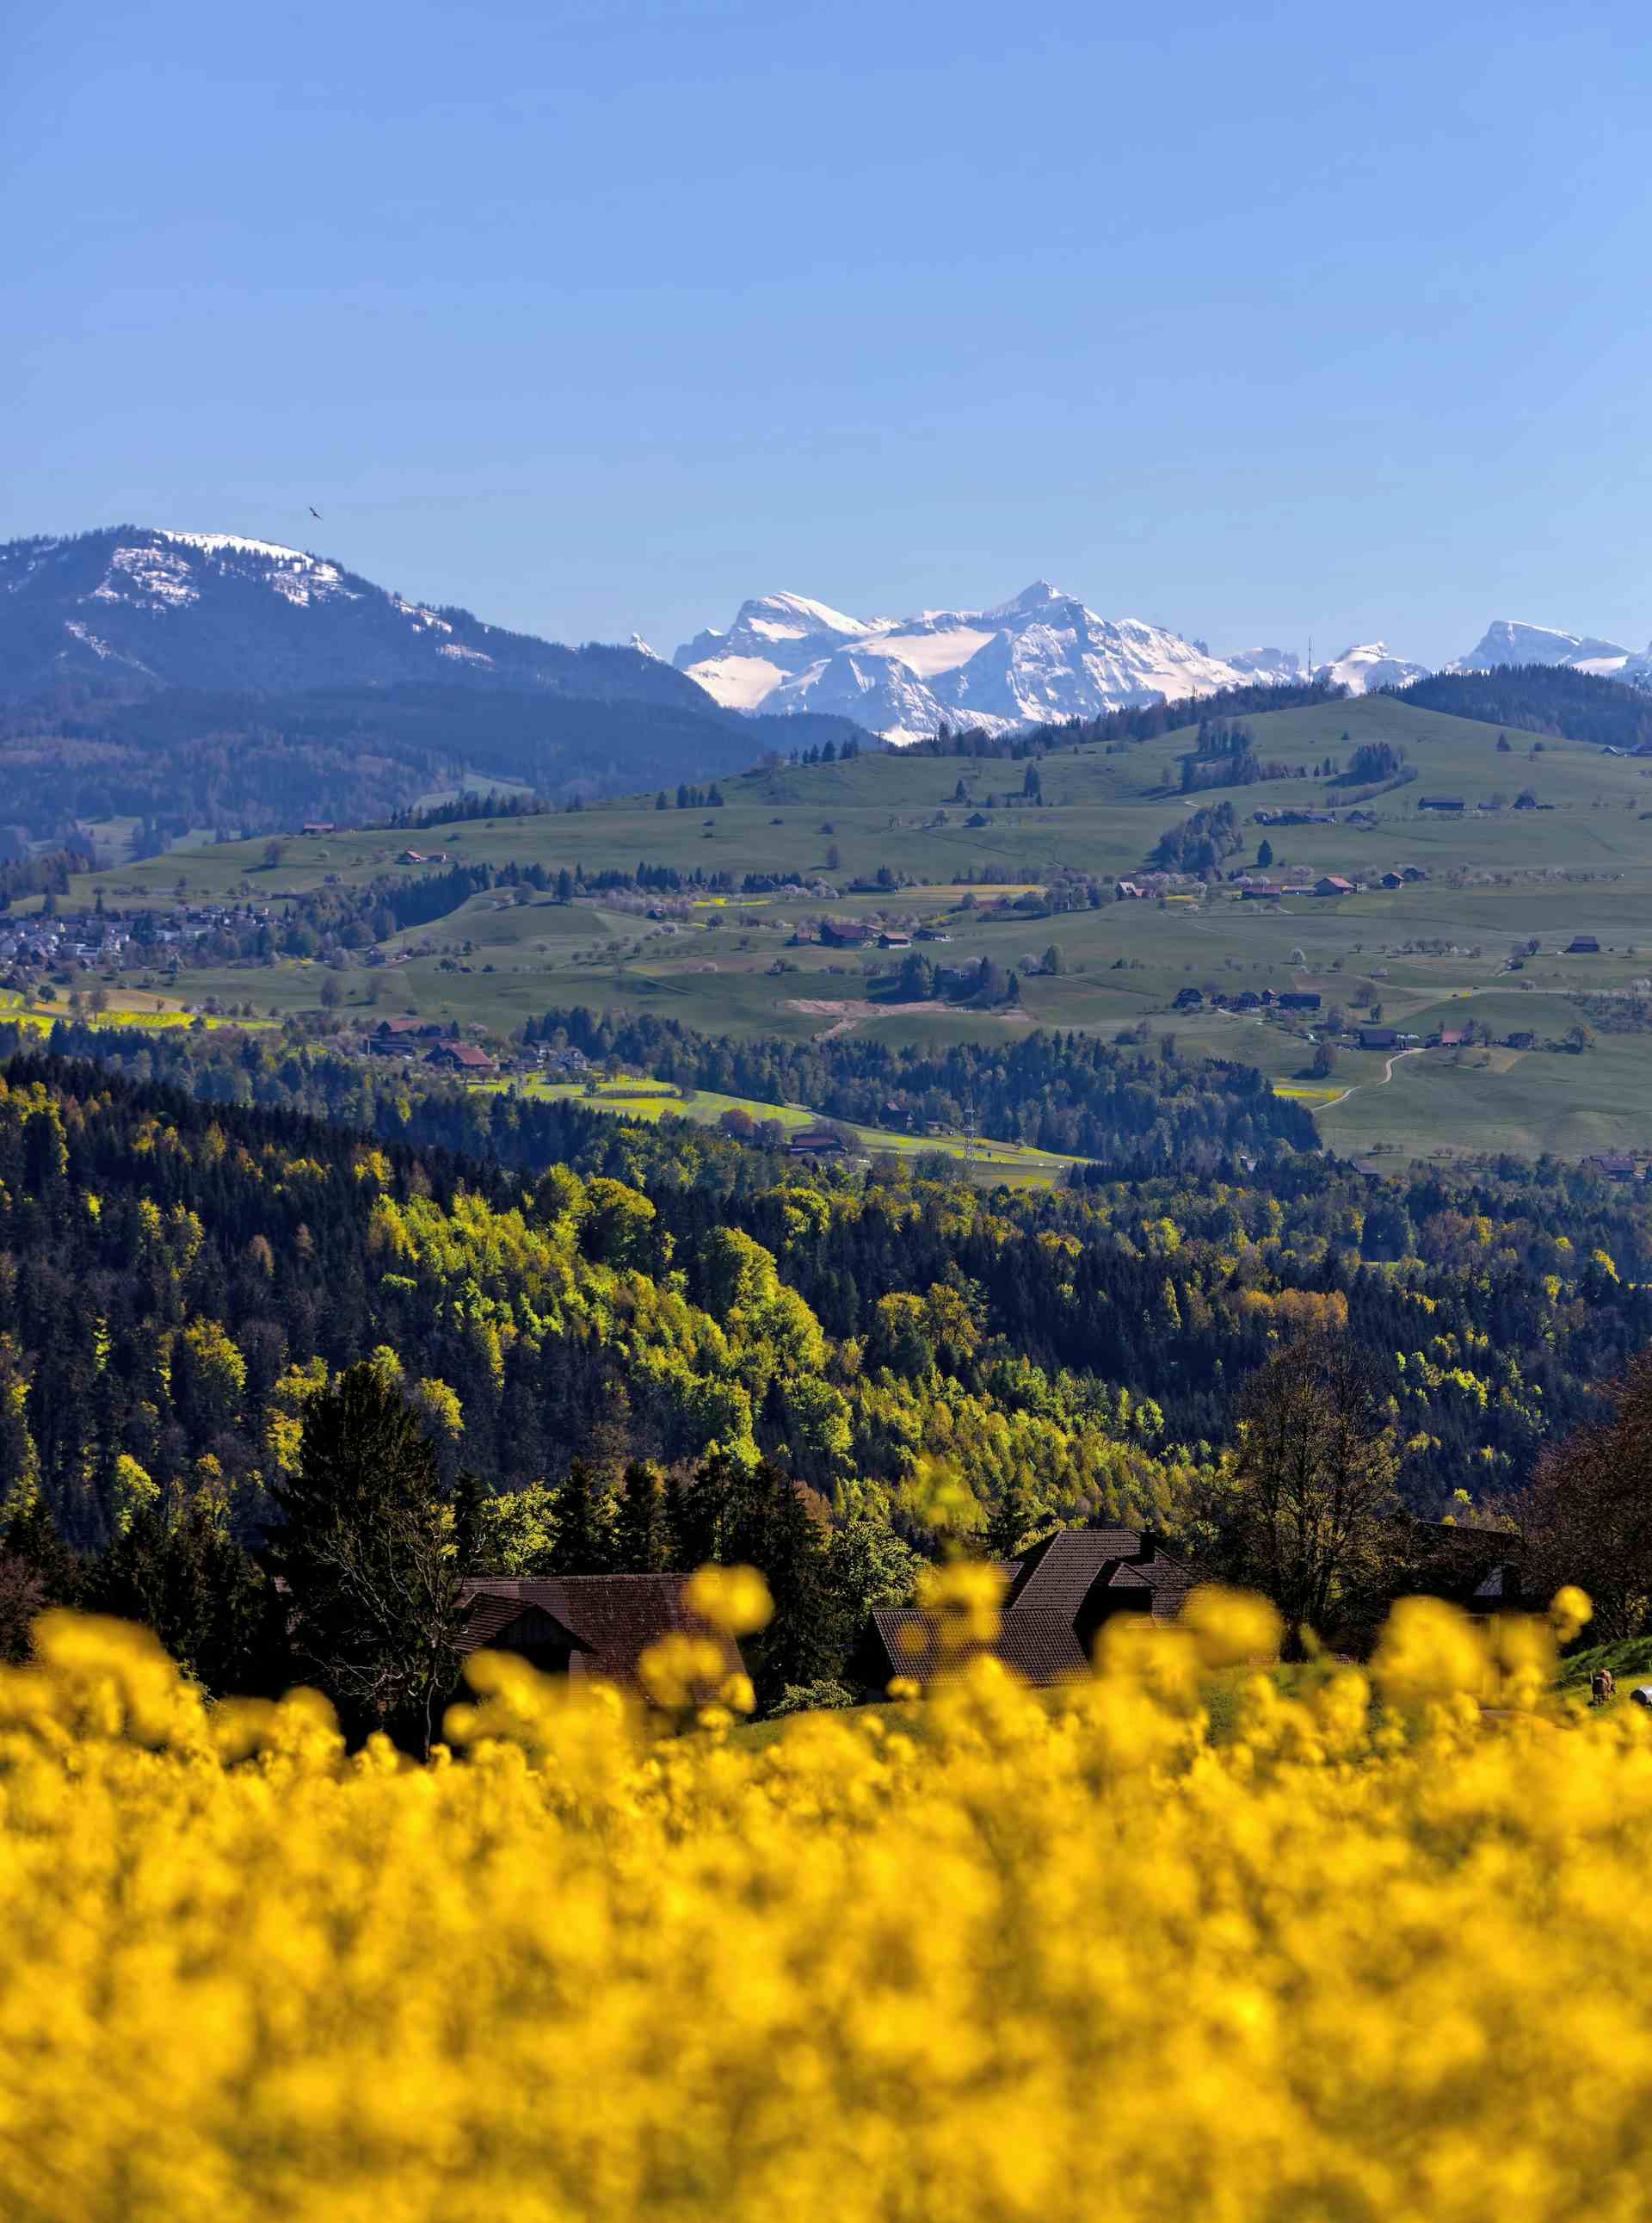 Biohof Zug, producer in Zug canton of Zug in Switzerland